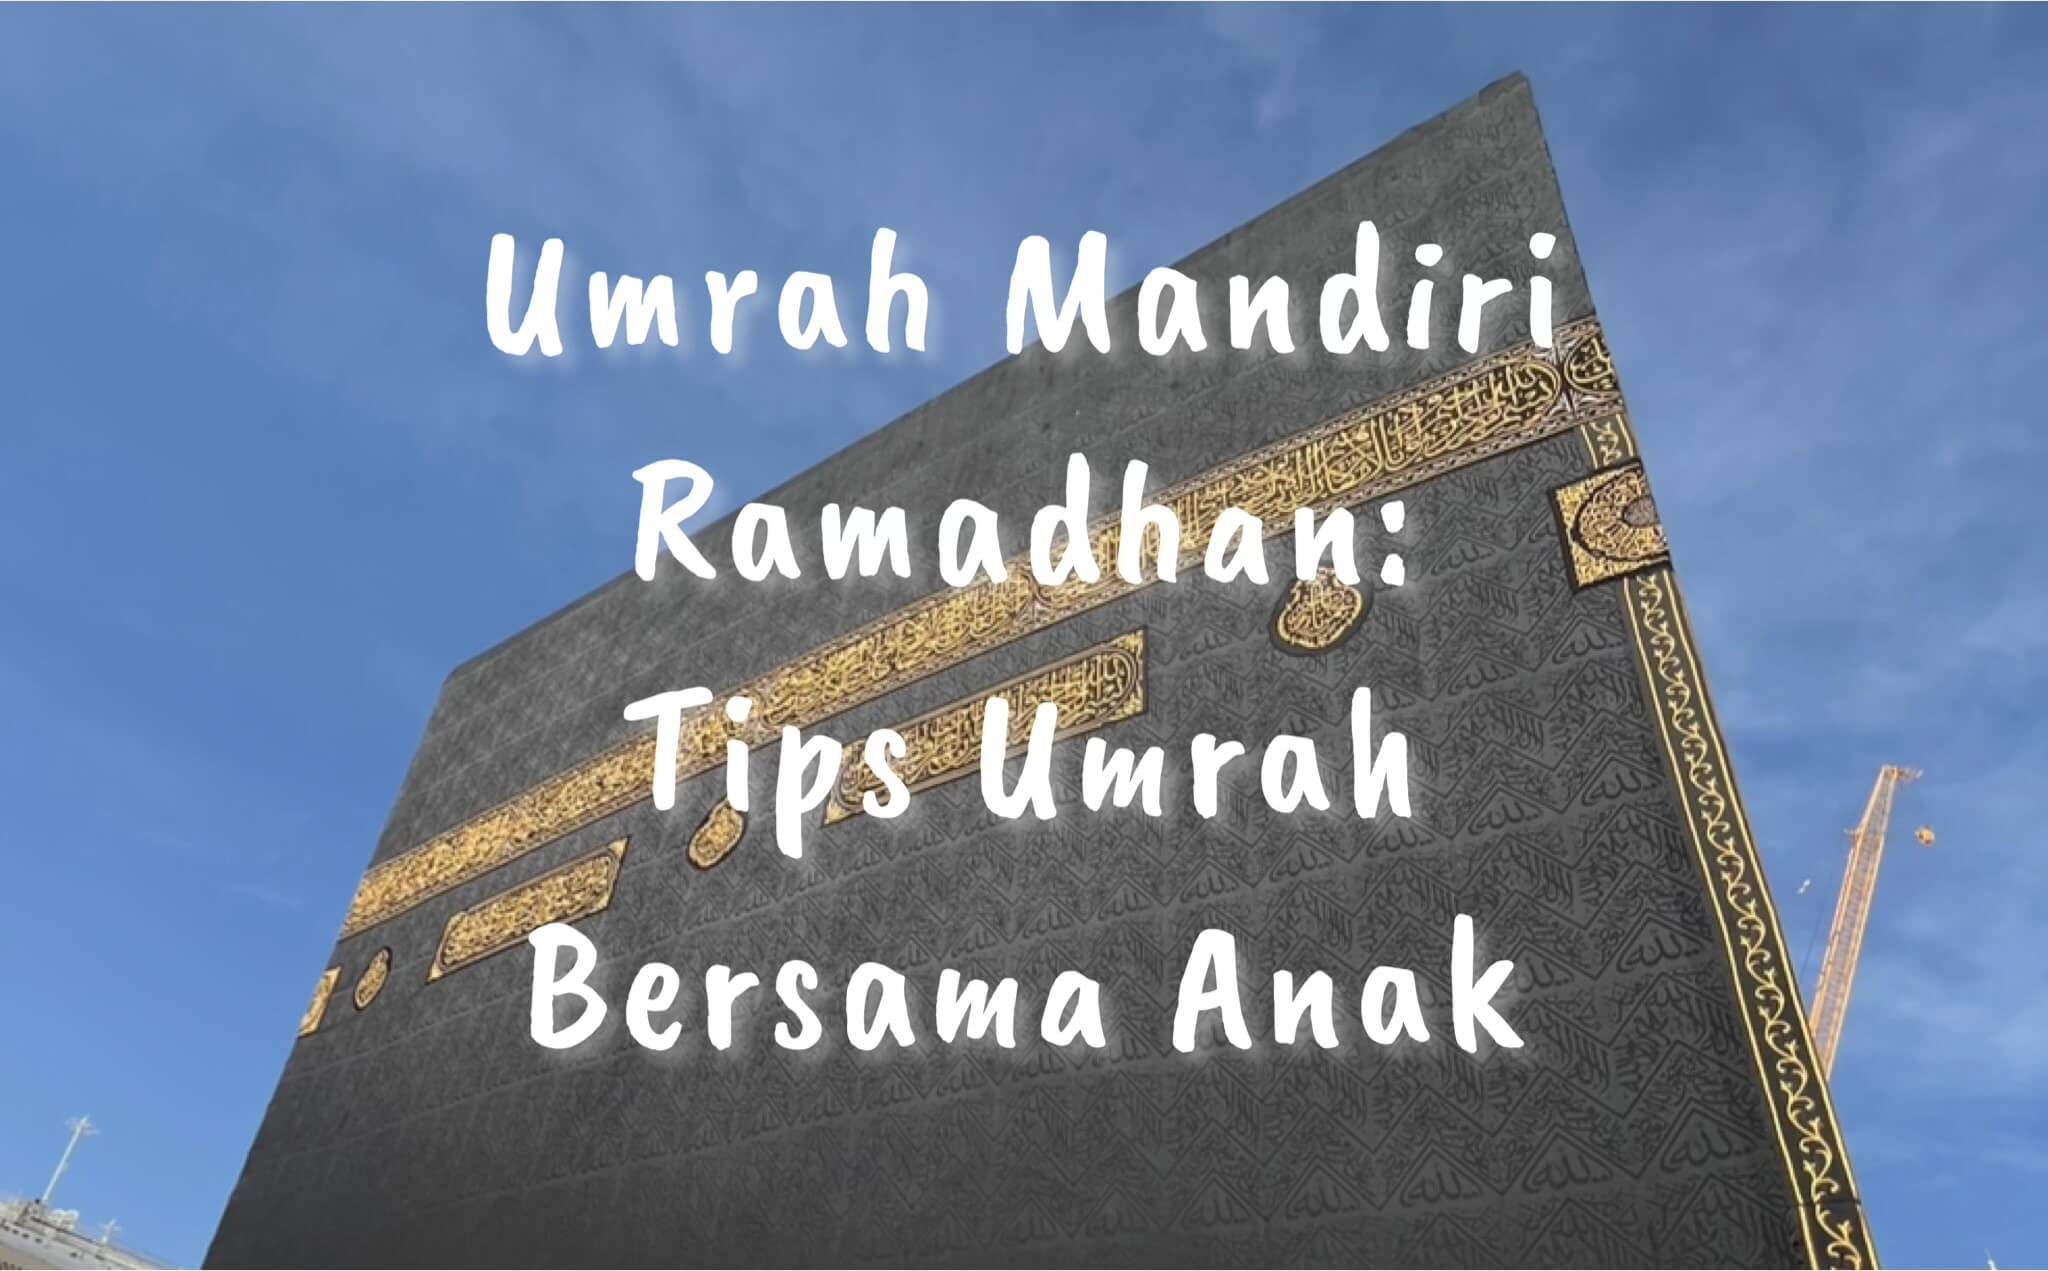 Umroh Mandiri Ramadhan: Labbaikallahumma Umratan